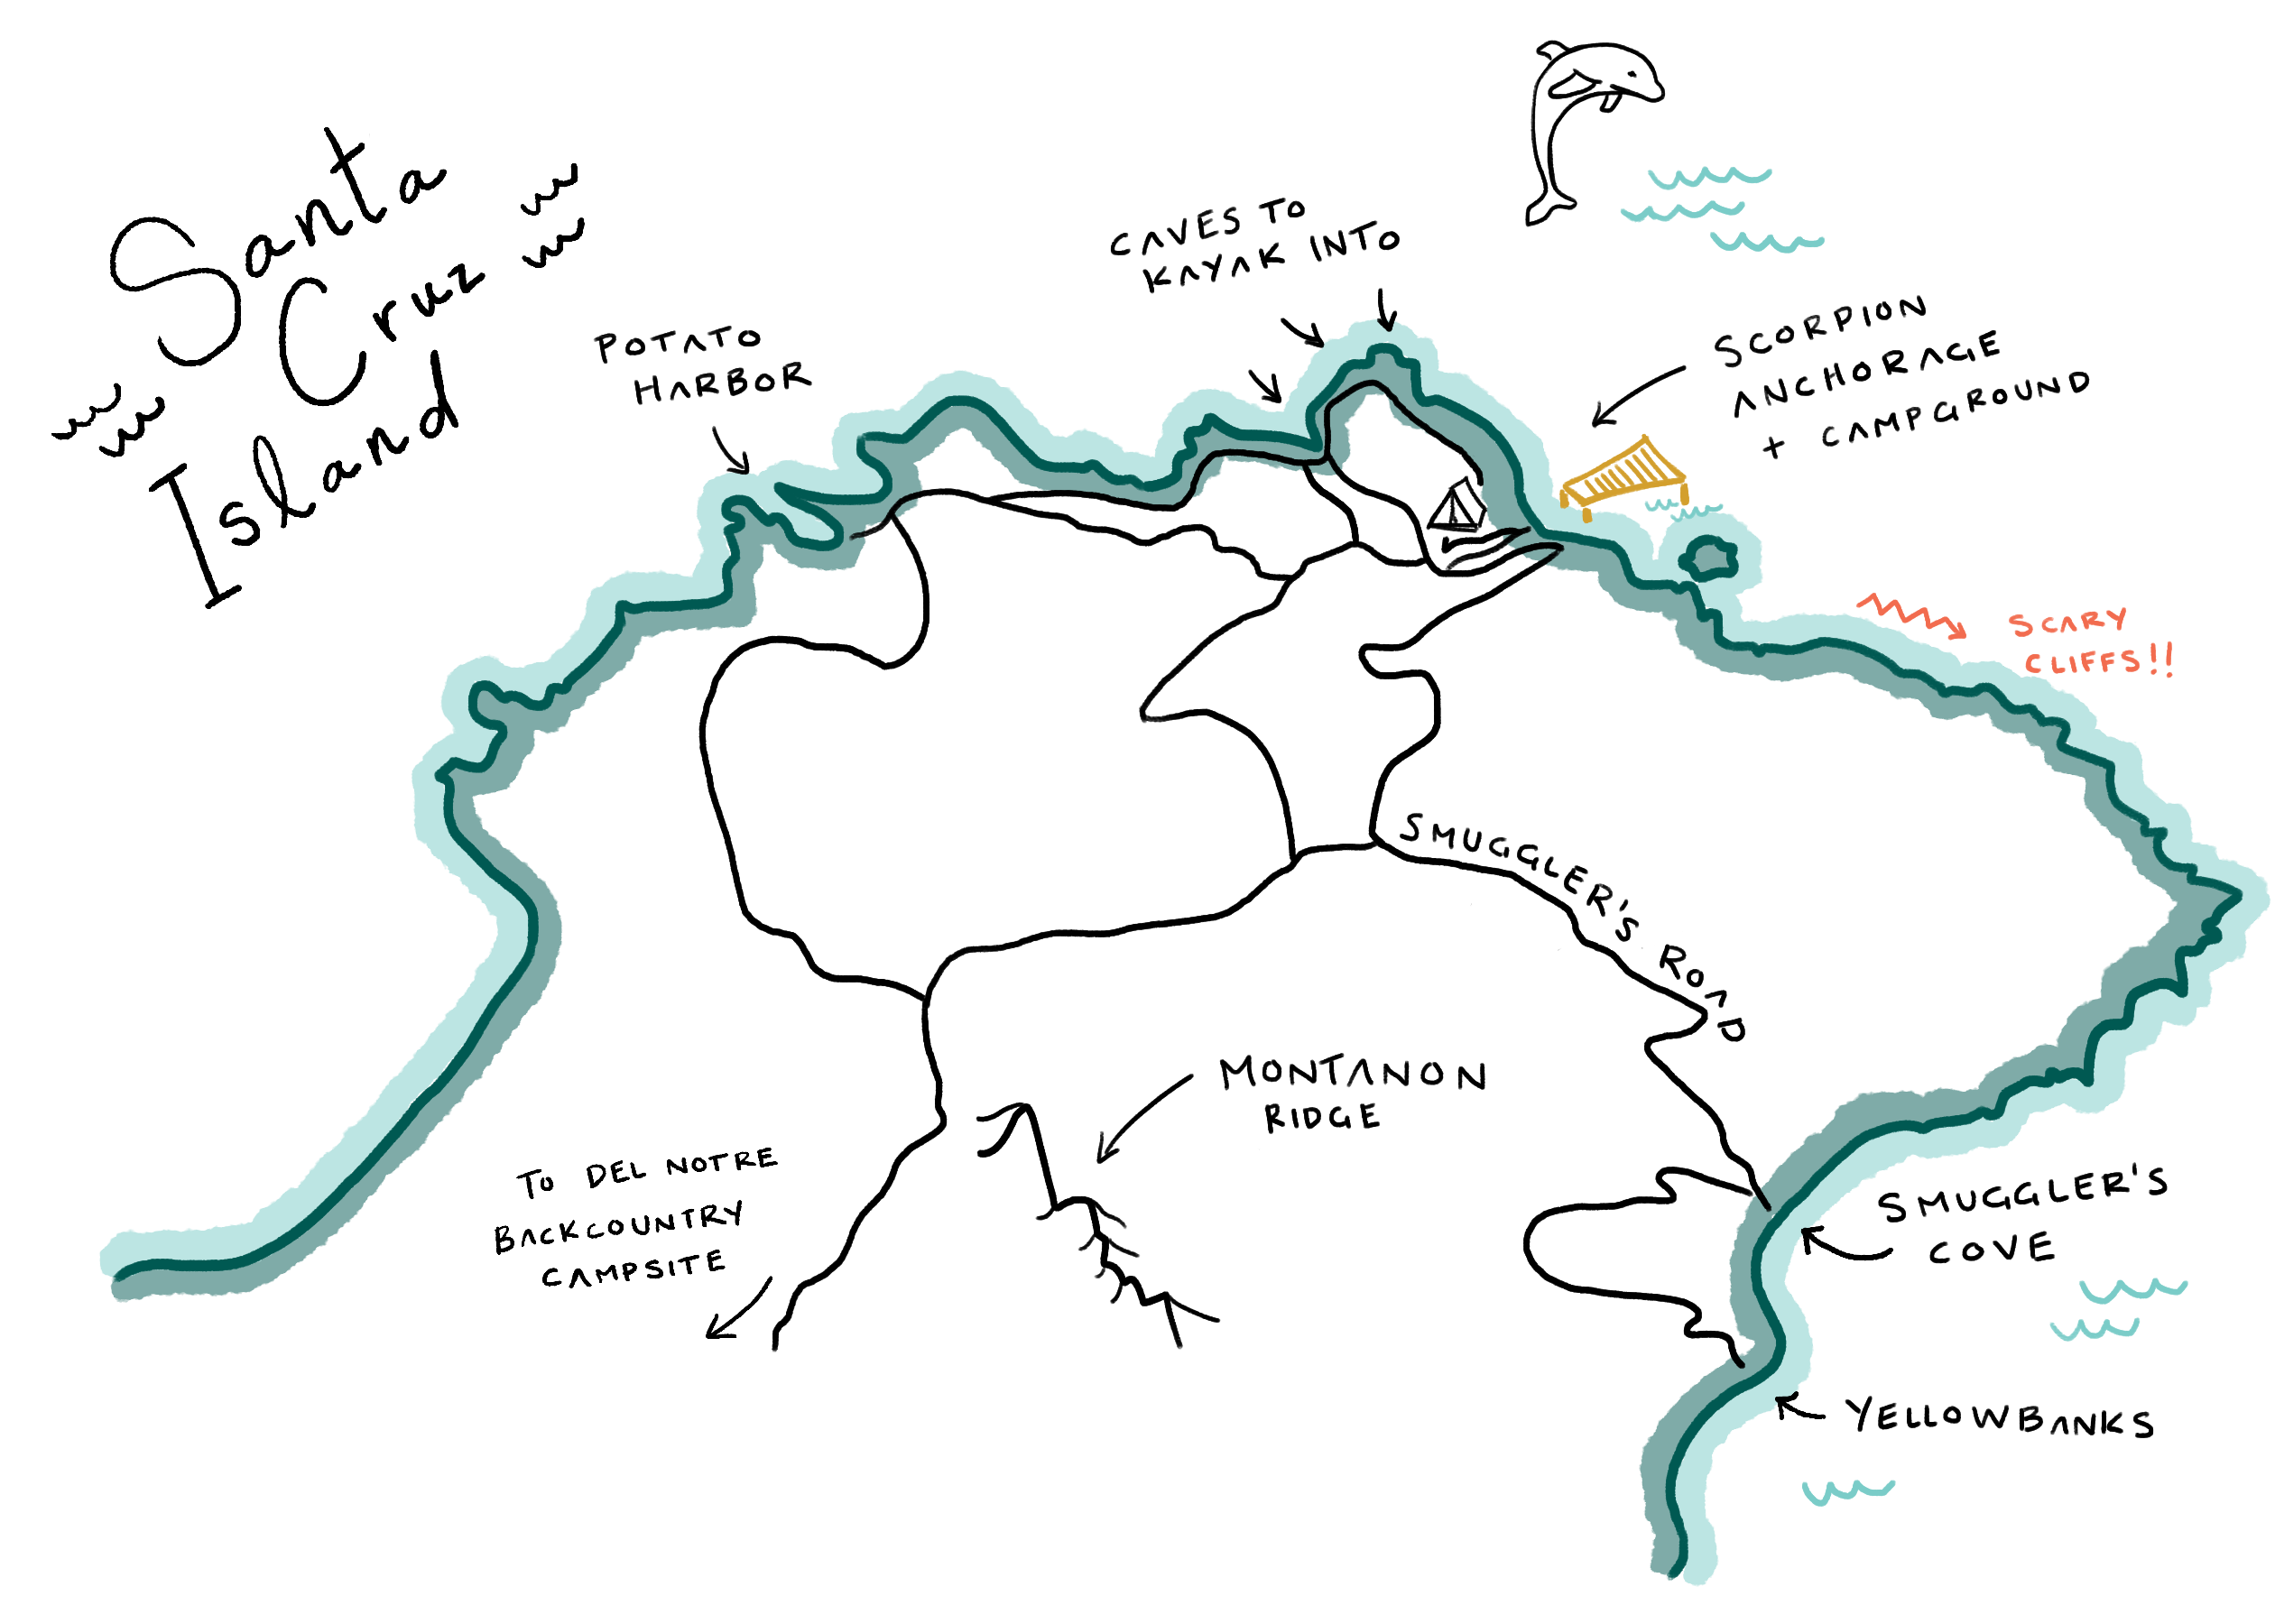 Santa Cruz Island in Channel Islands National Park backpacking guide map